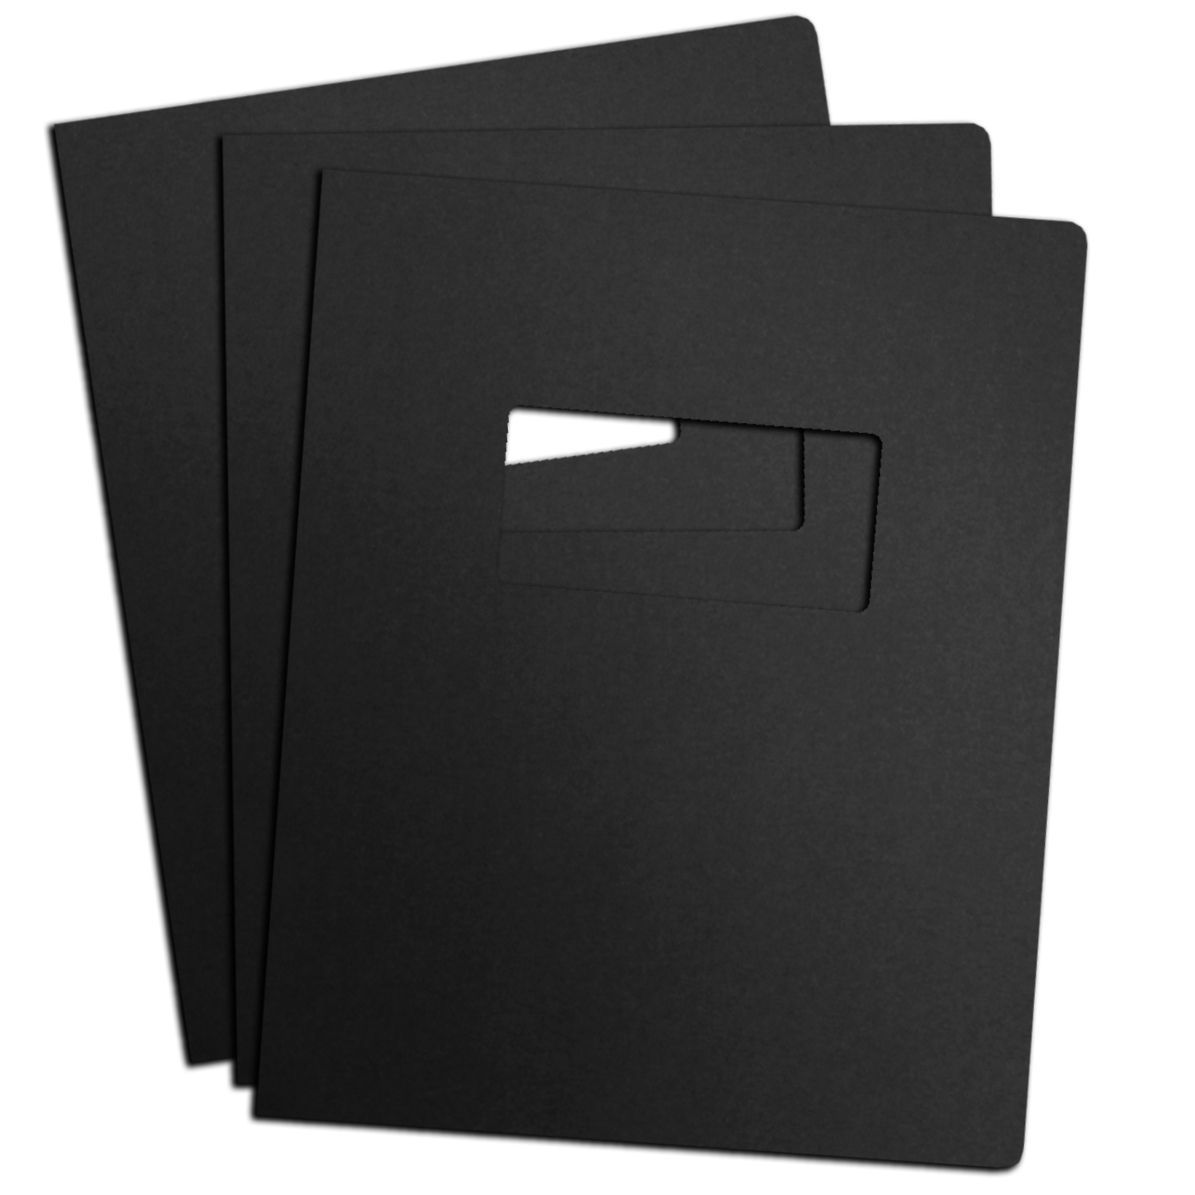 8.5" x 11" Black Linen Report Covers Image 1